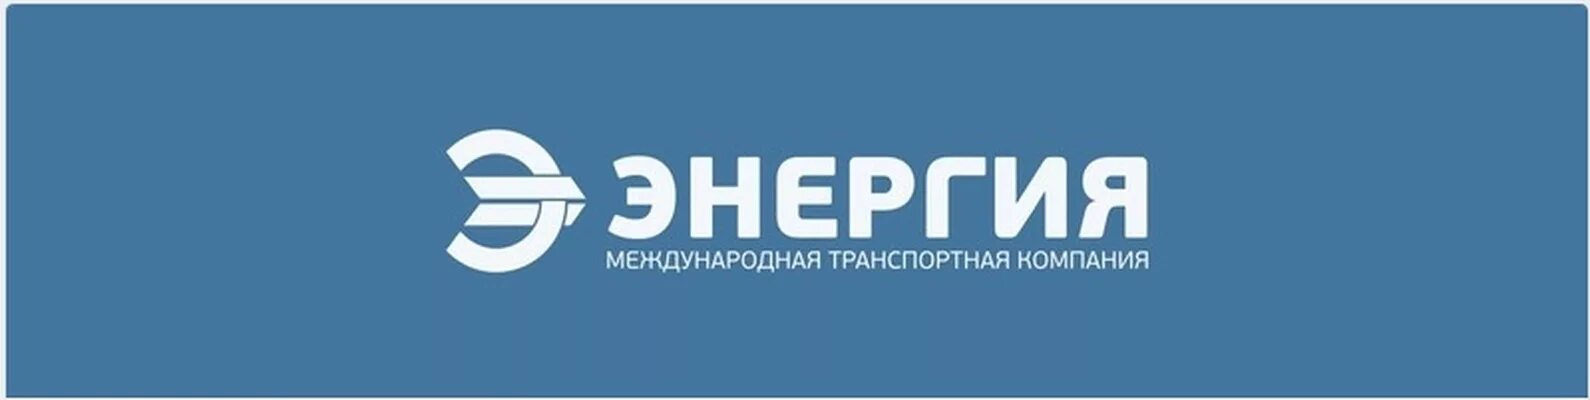 Https nrg tk ru. Логотип компании ТК энергия. Энергия транспортная компания лого. МТК энергия логотип. Транспортная компания энергия Новосибирск.